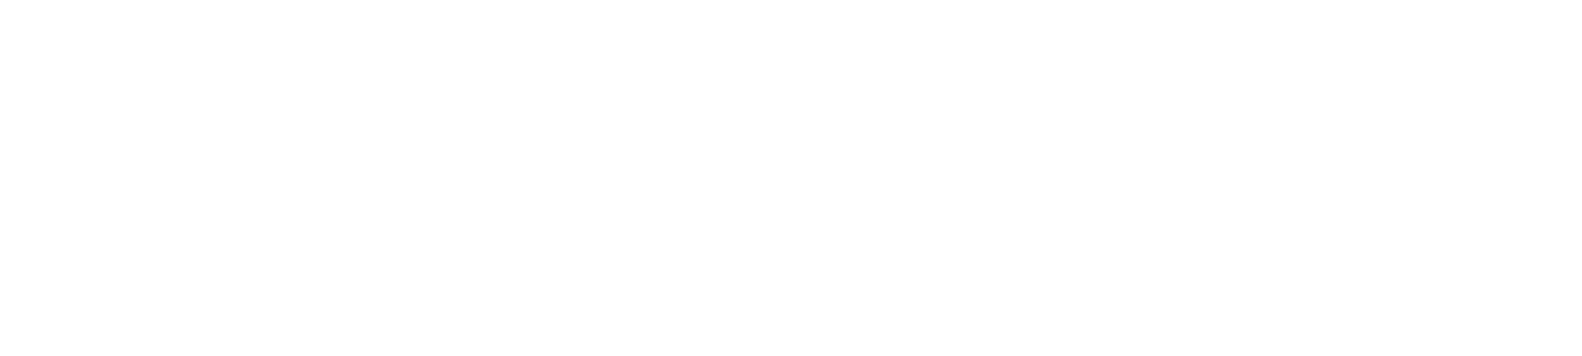 Gamma Communications logo large for dark backgrounds (transparent PNG)